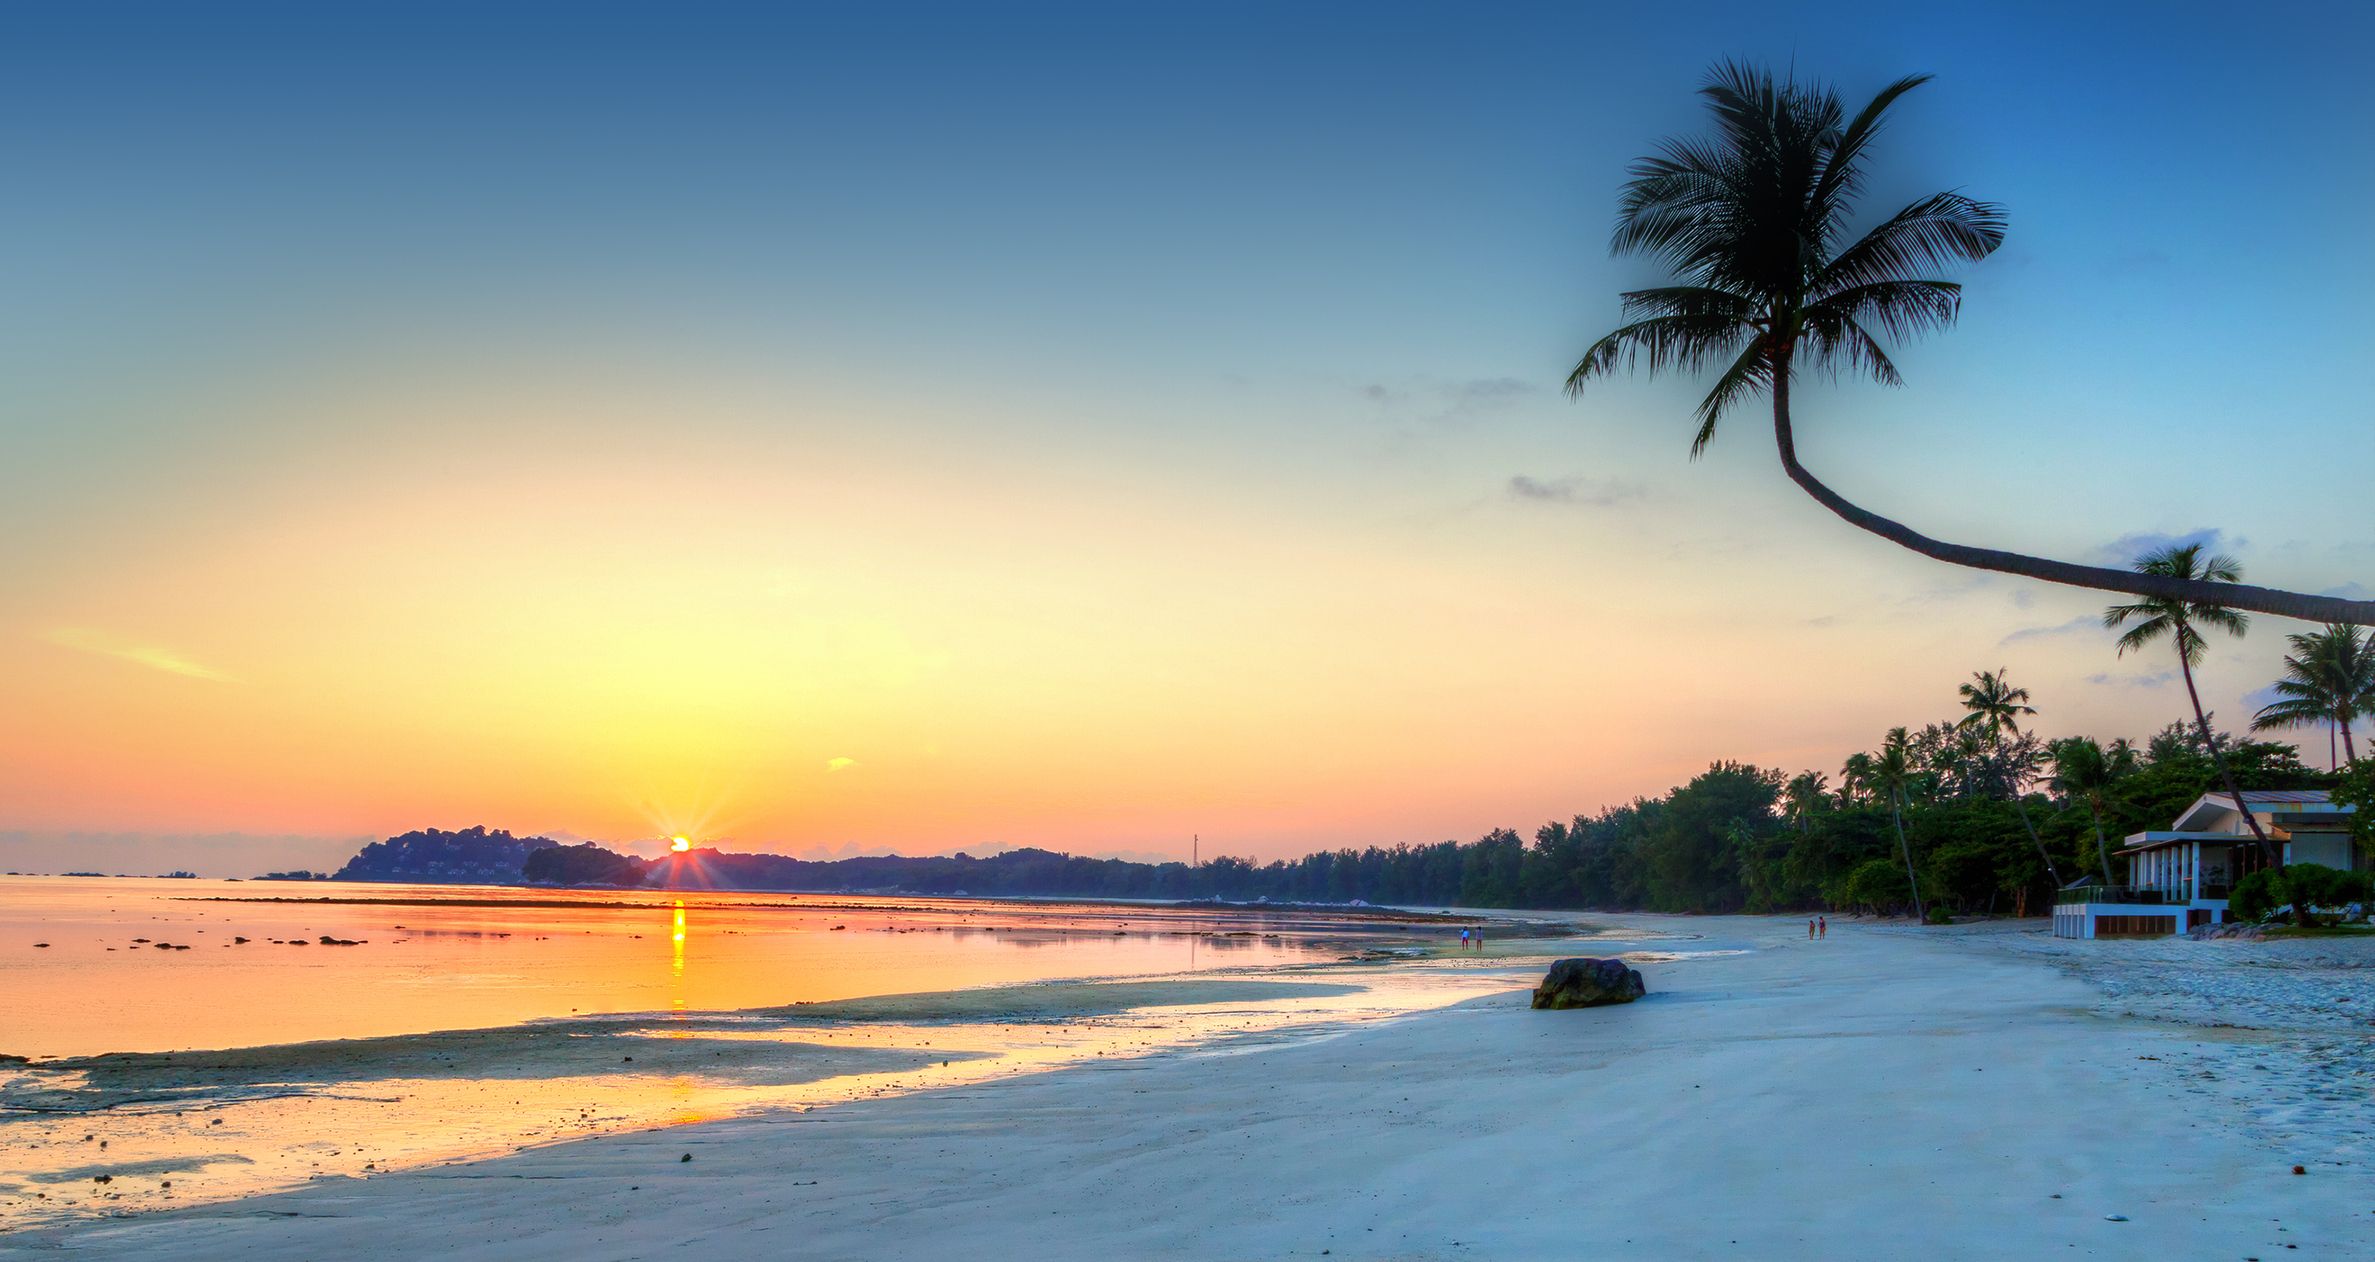 Sunrise on Bintan Island